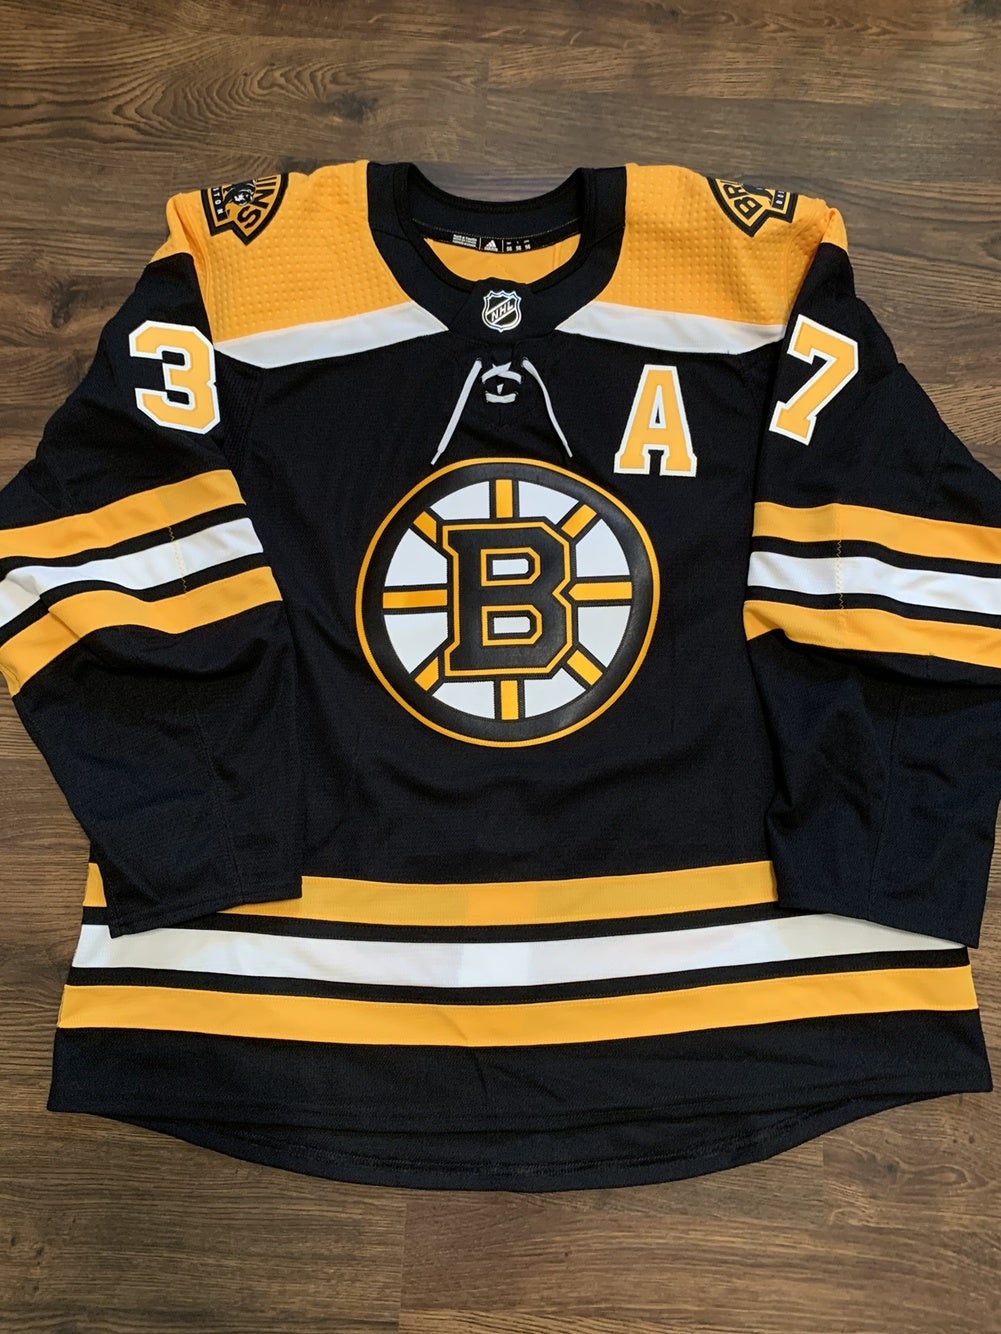 NHL Boston Bruins Authentic Patrice Bergeron Adidas Size 46 (Small